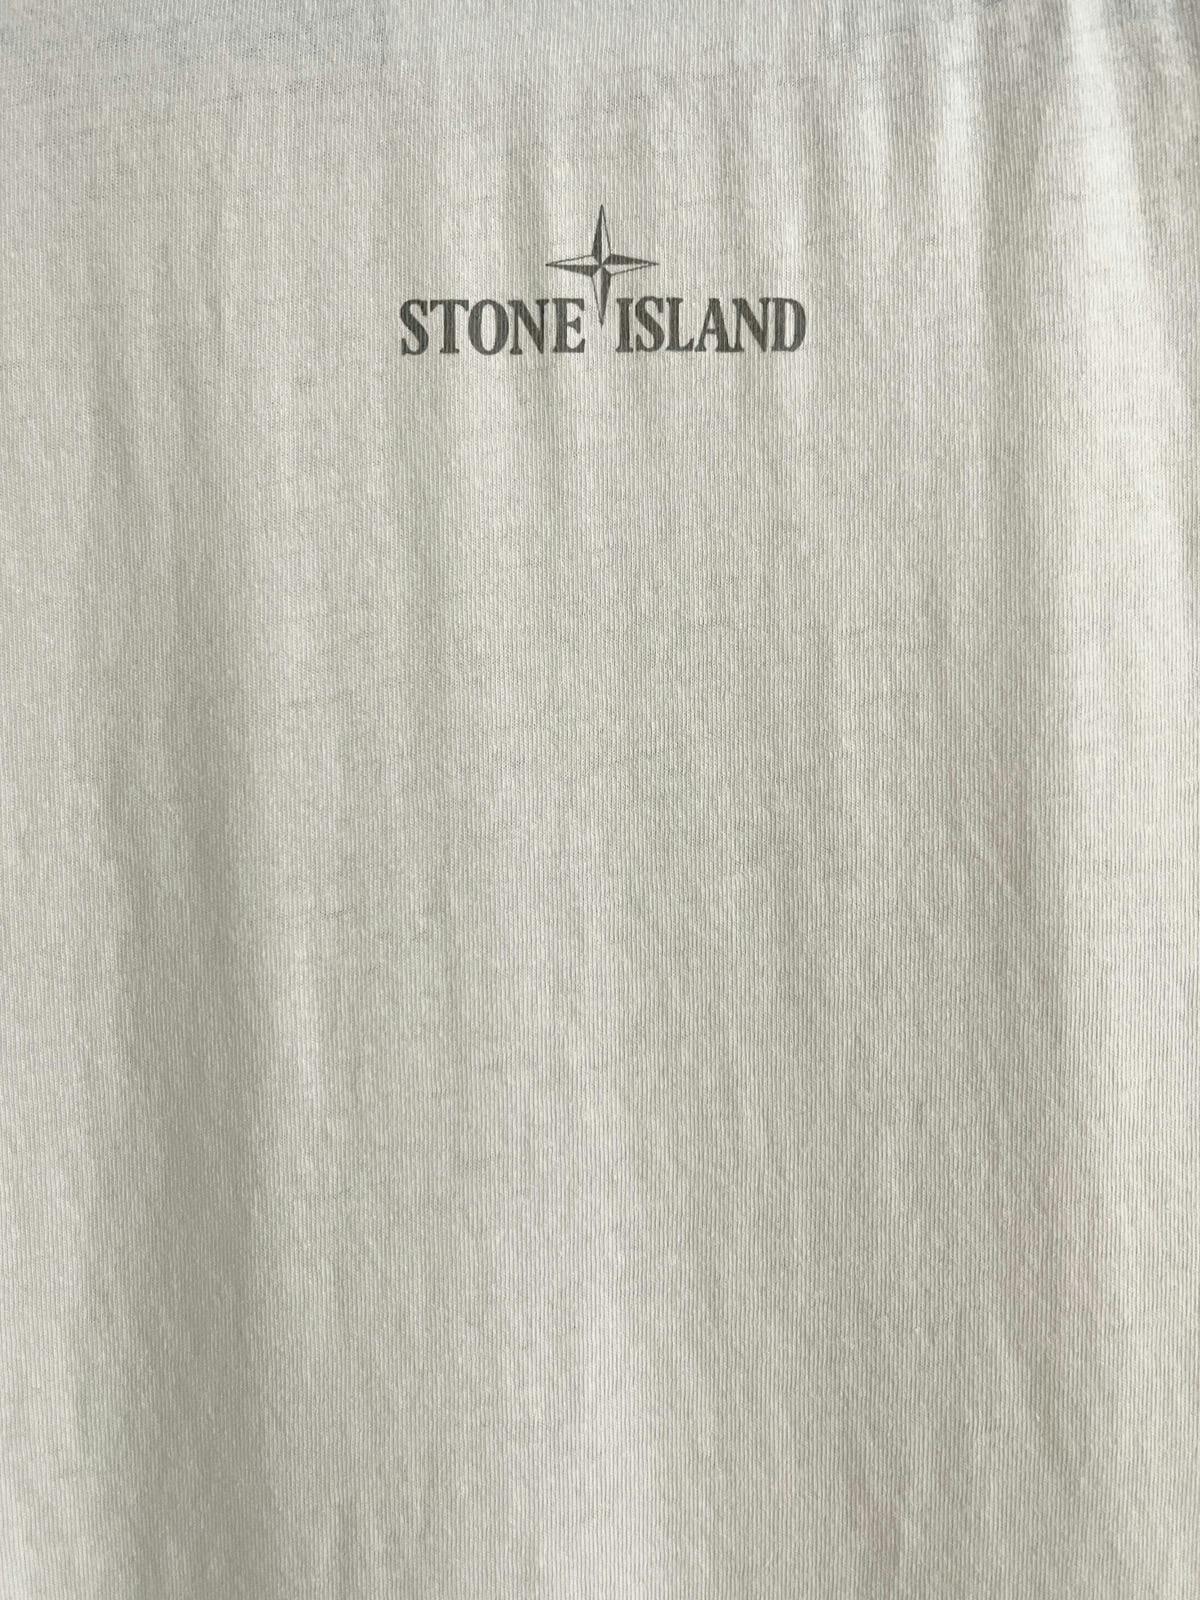 Vintage 2000s Stone Island Large Compass Logo Distressed Tee - 5